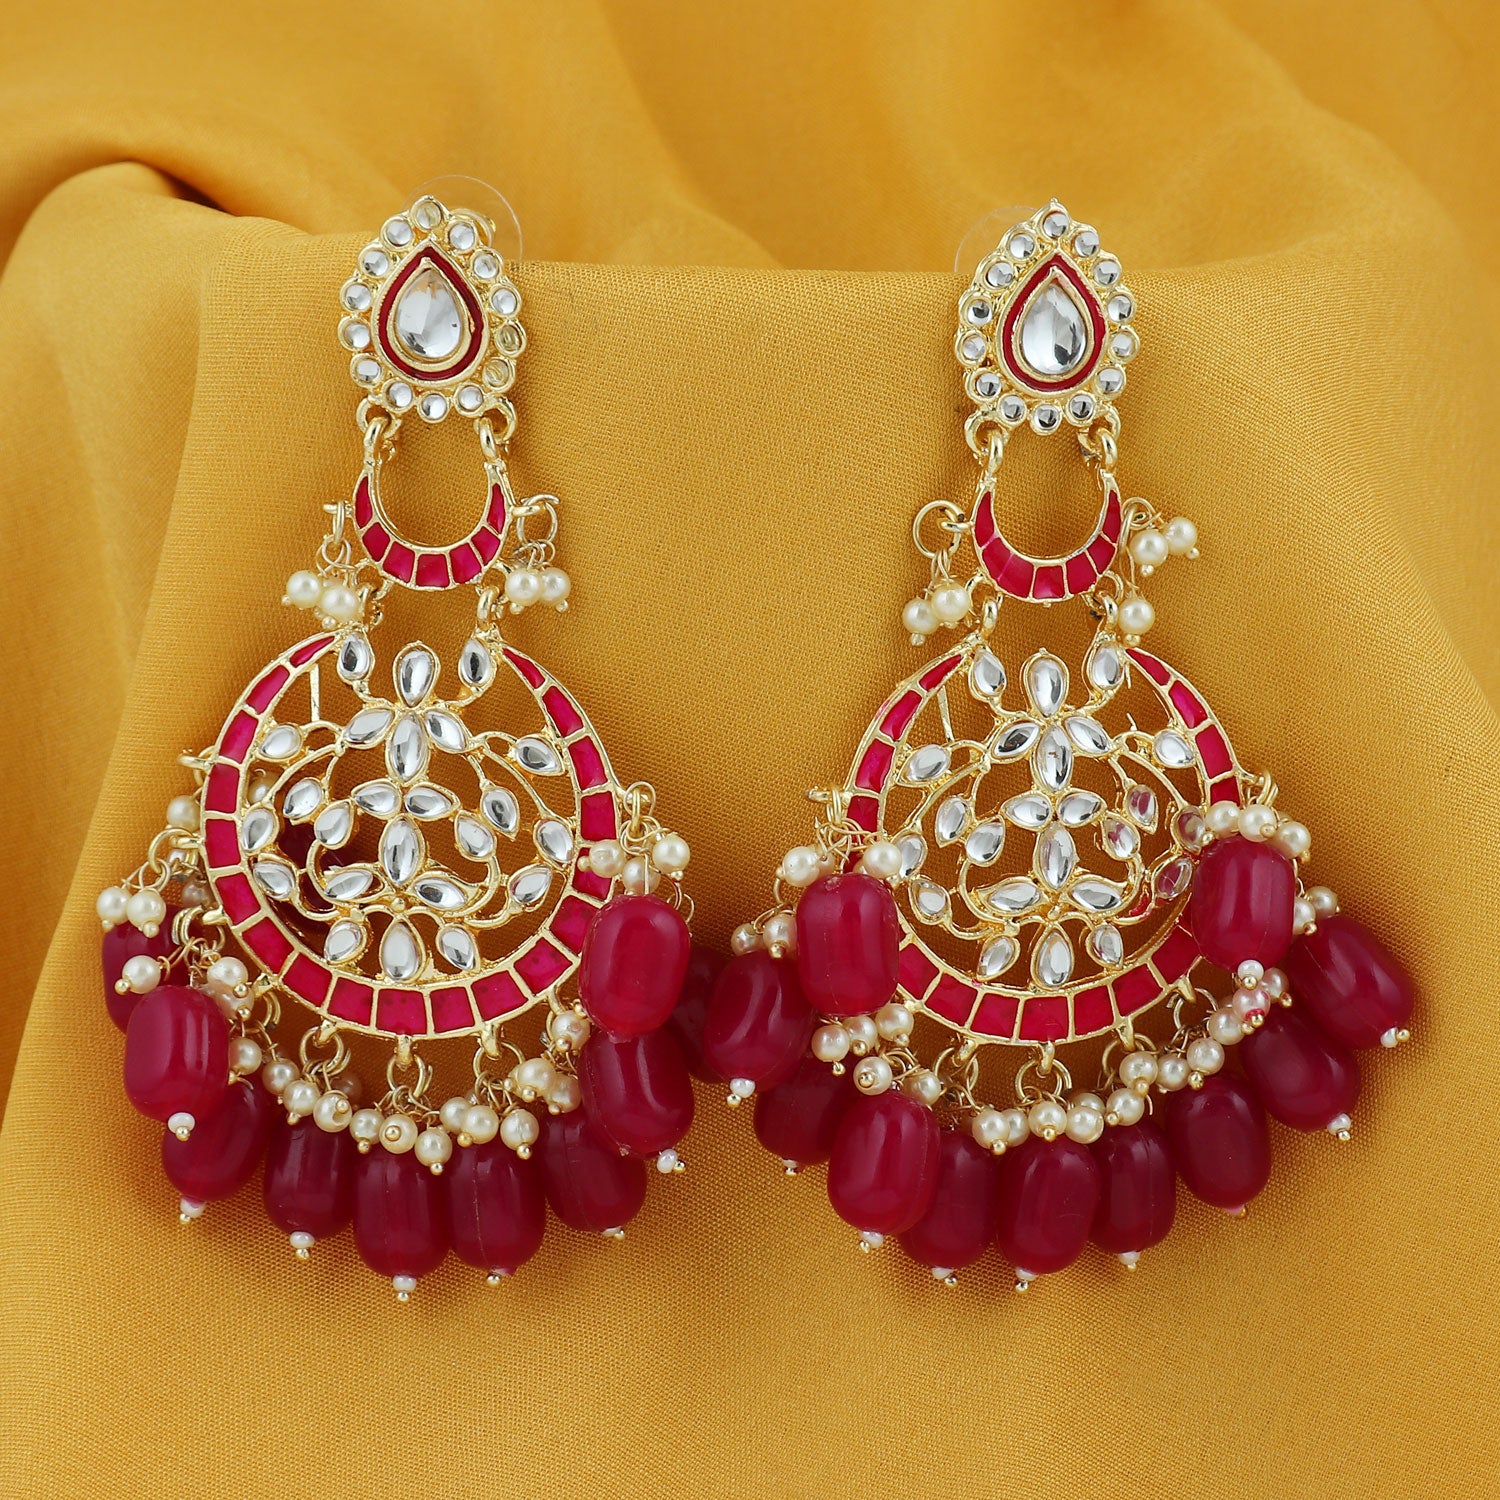 Chandbali Design Earrings South India Jewels Online Shop